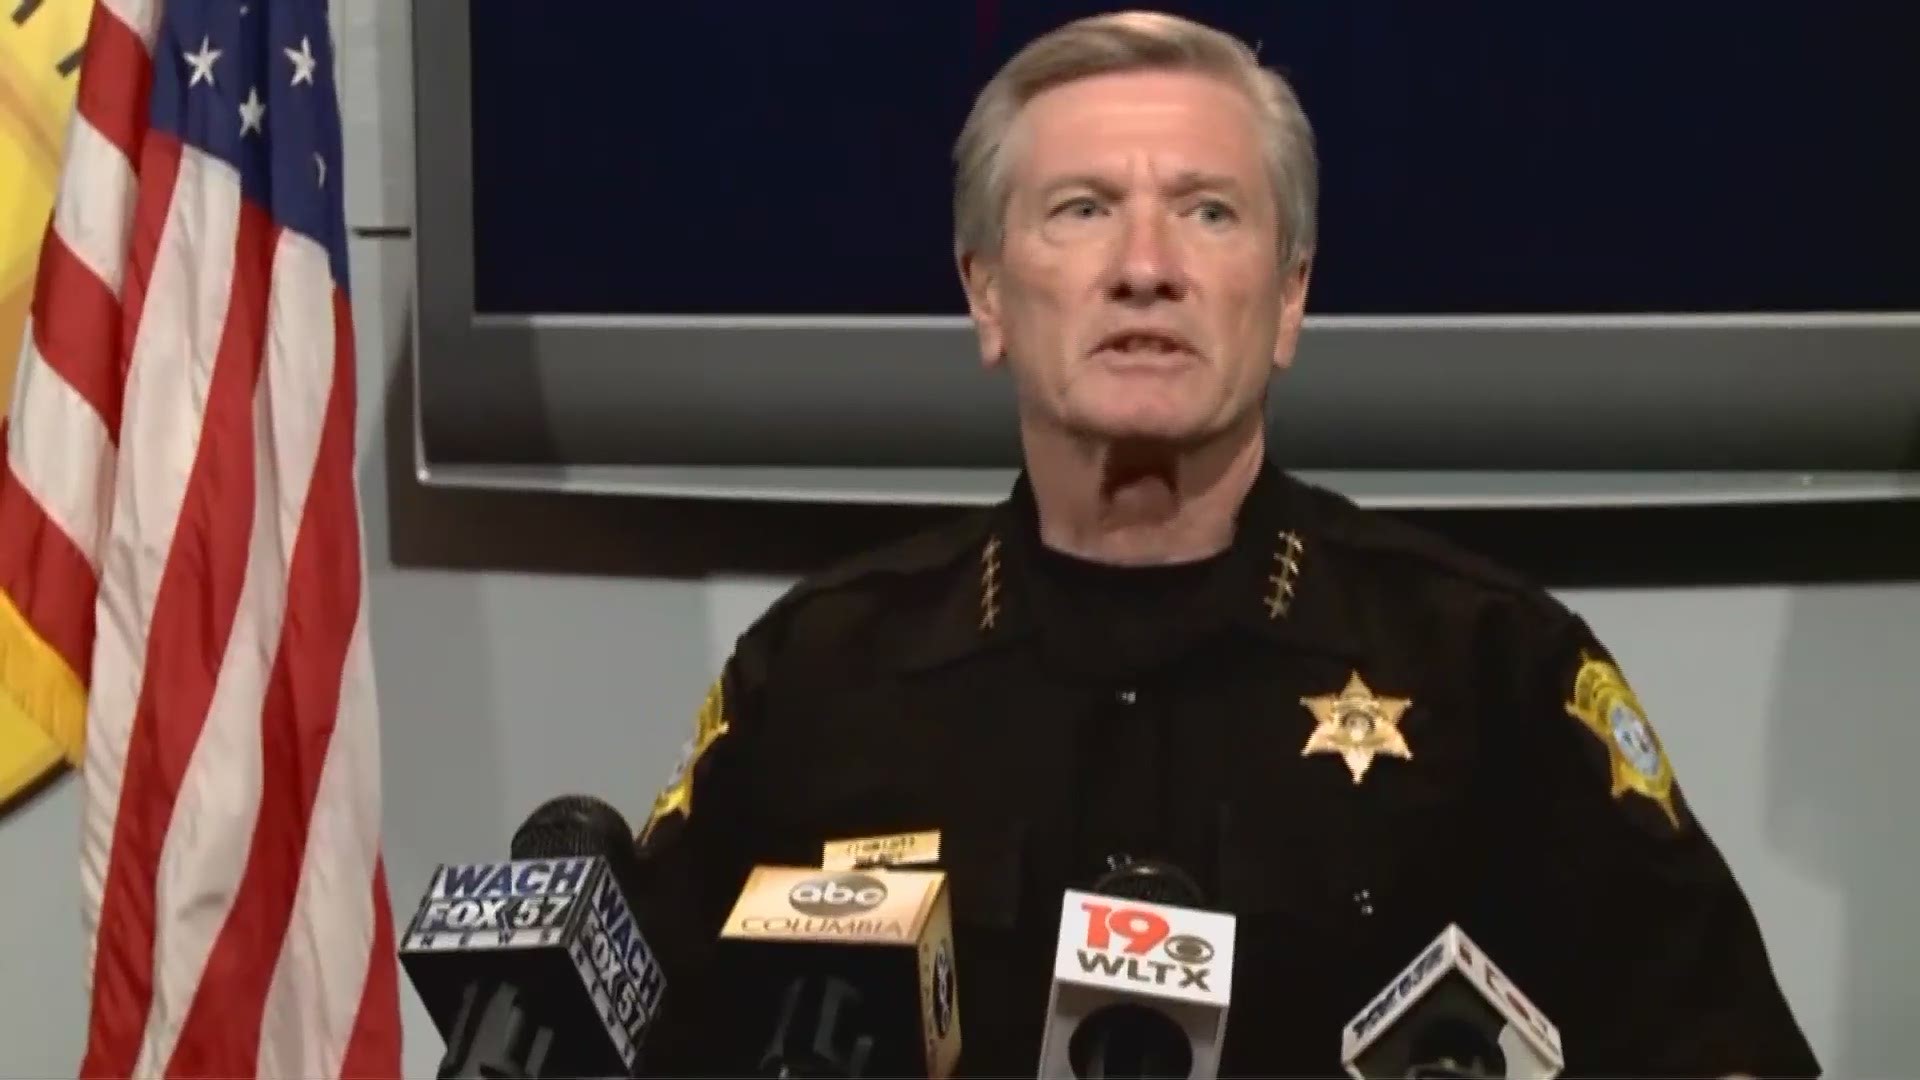 Sheriff Leon Lott says Deputy Derek Fish killed himself last week.